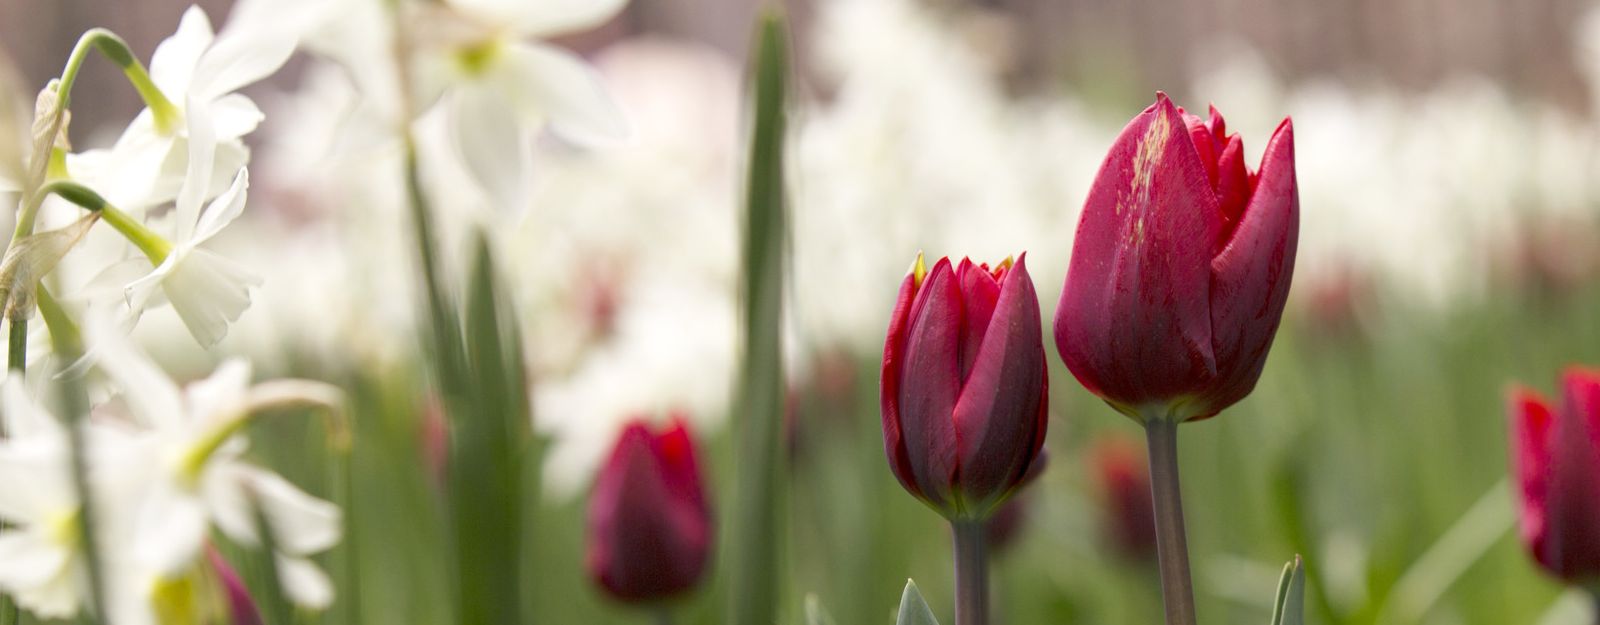 Close photograph of tulips in a garden